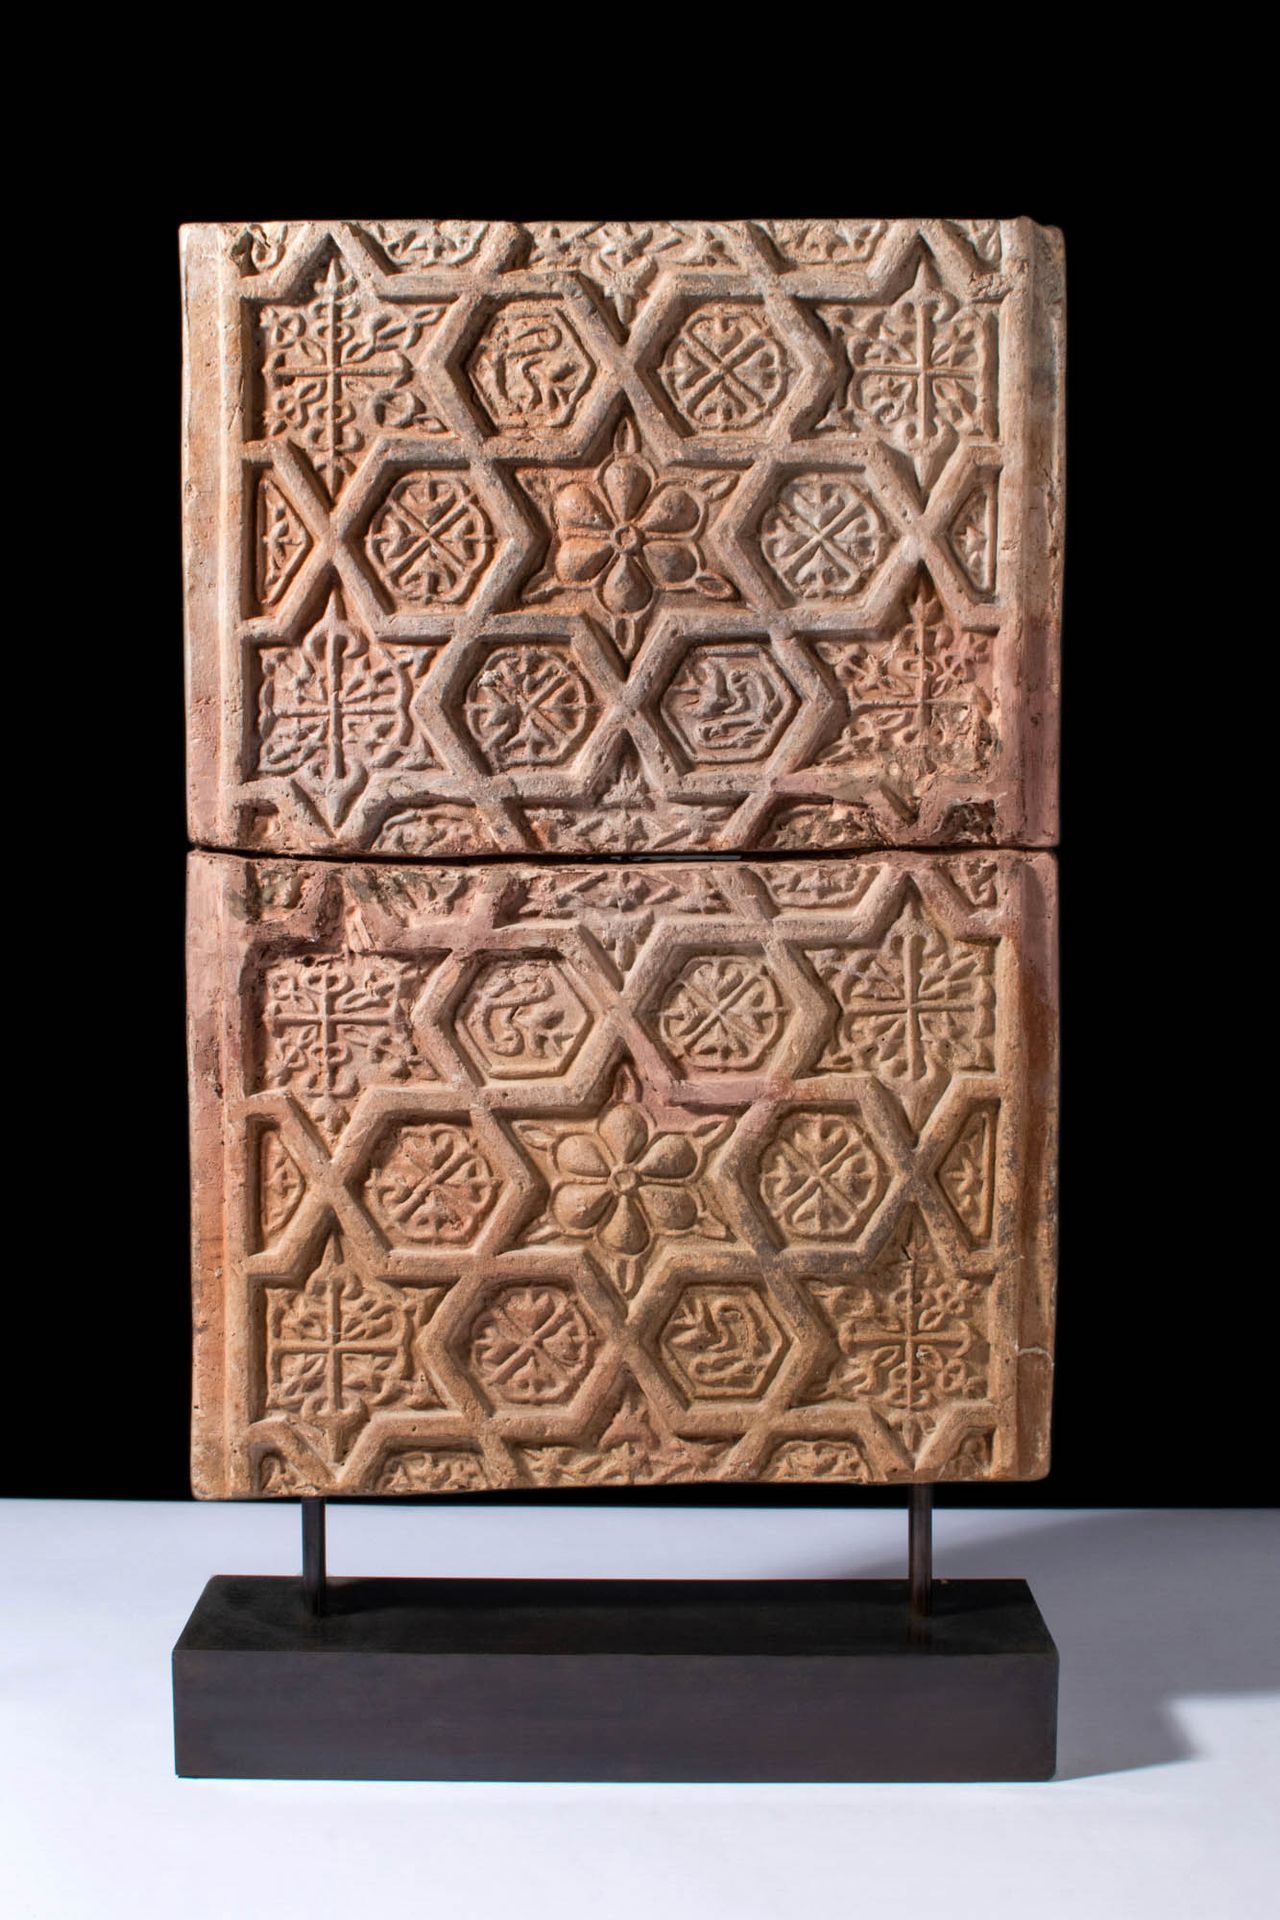 SELJUK TERRACOTTA PAIR OF DECORATIVE TILES Ca. AD 1100 - 1200.
Pareja de azulejo&hellip;